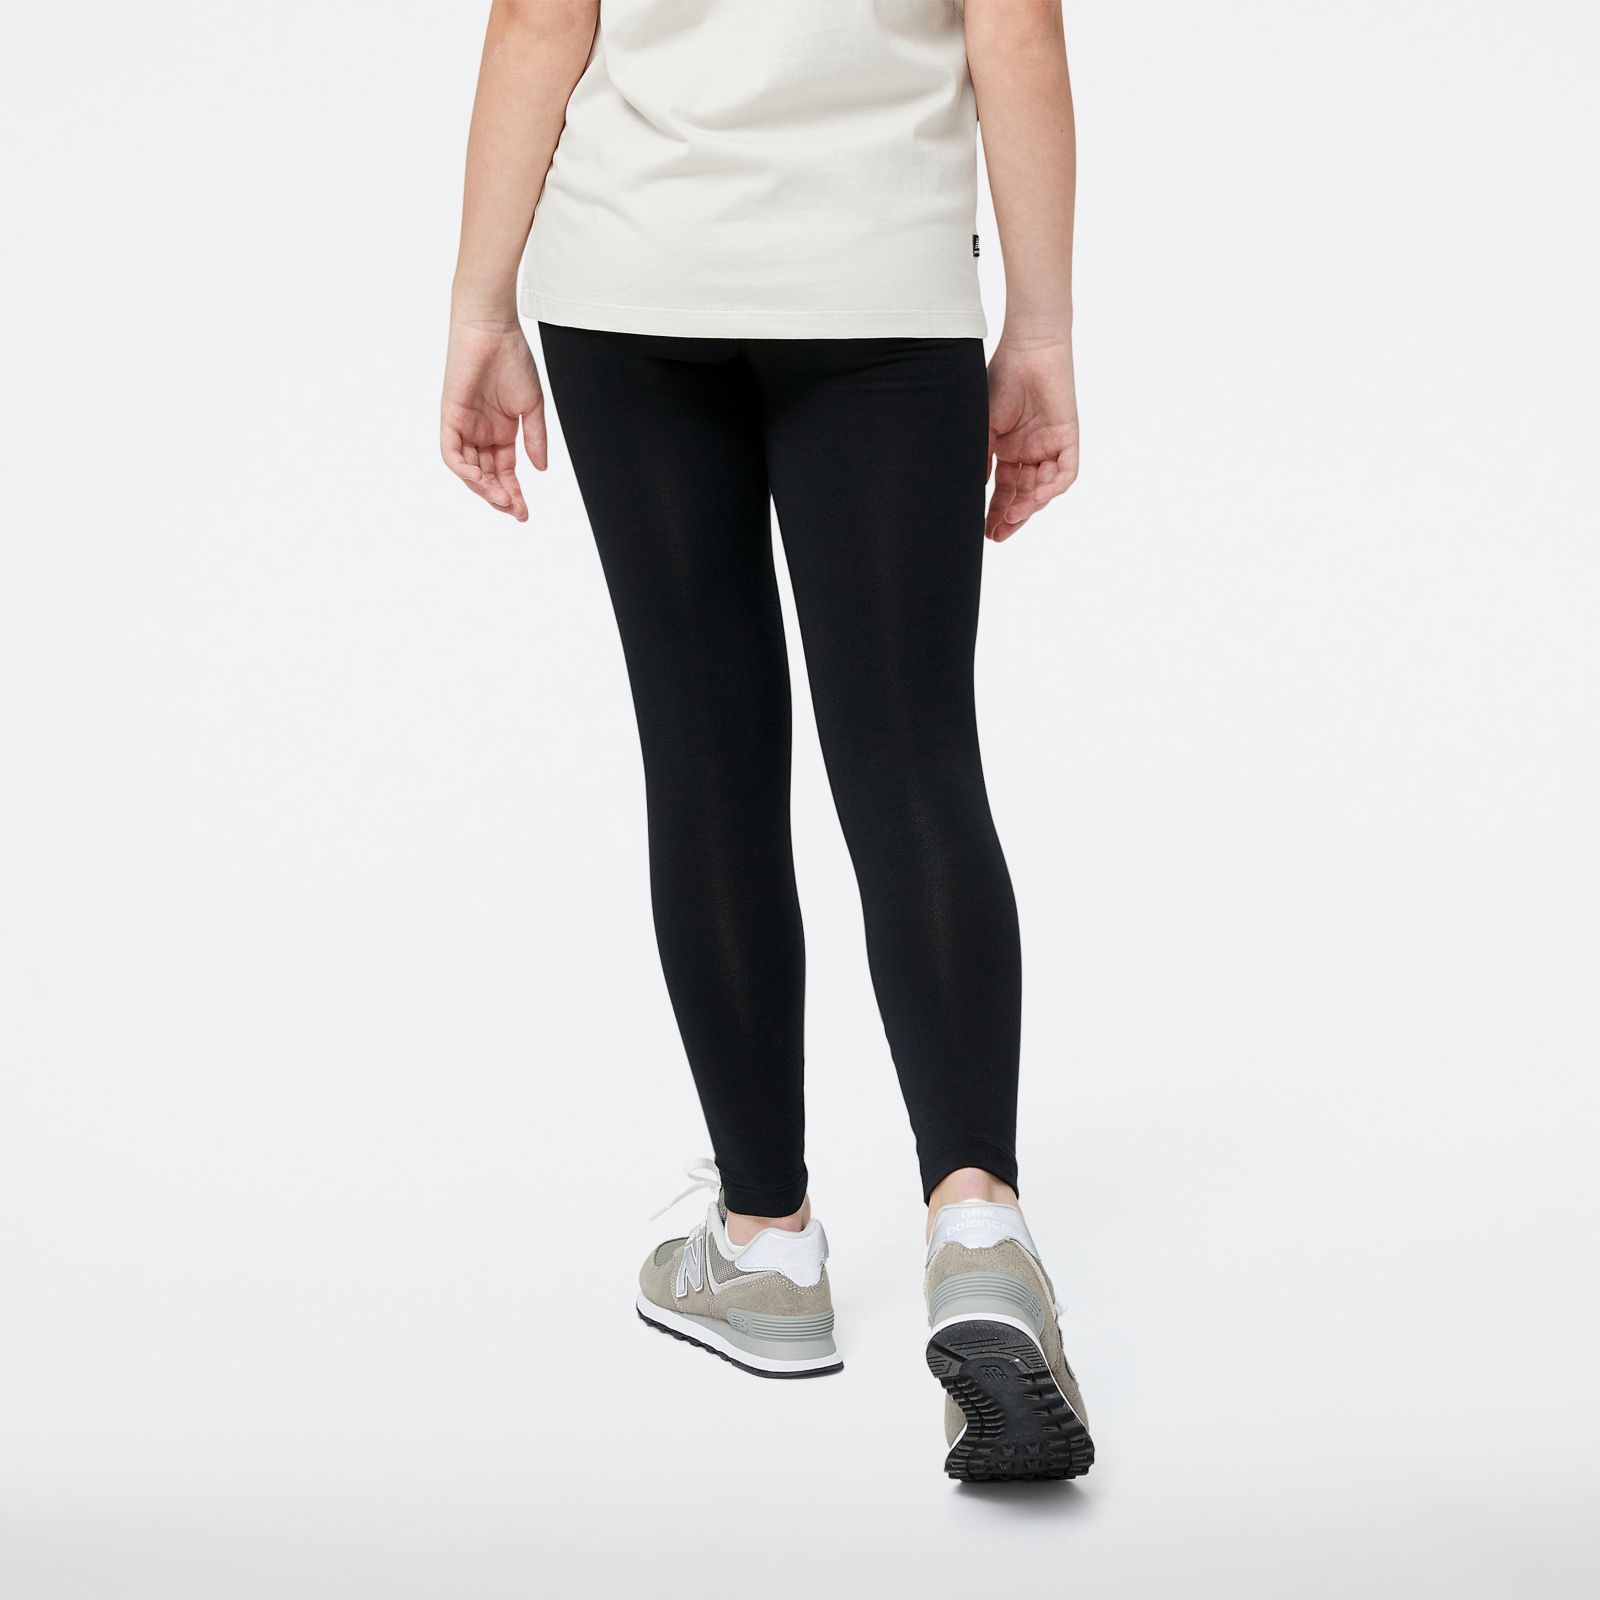 ALLBRAND365 DESIGNER WOMENS Activewear Trimmed Yoga Leggings,Black,Medium  £36.44 - PicClick UK